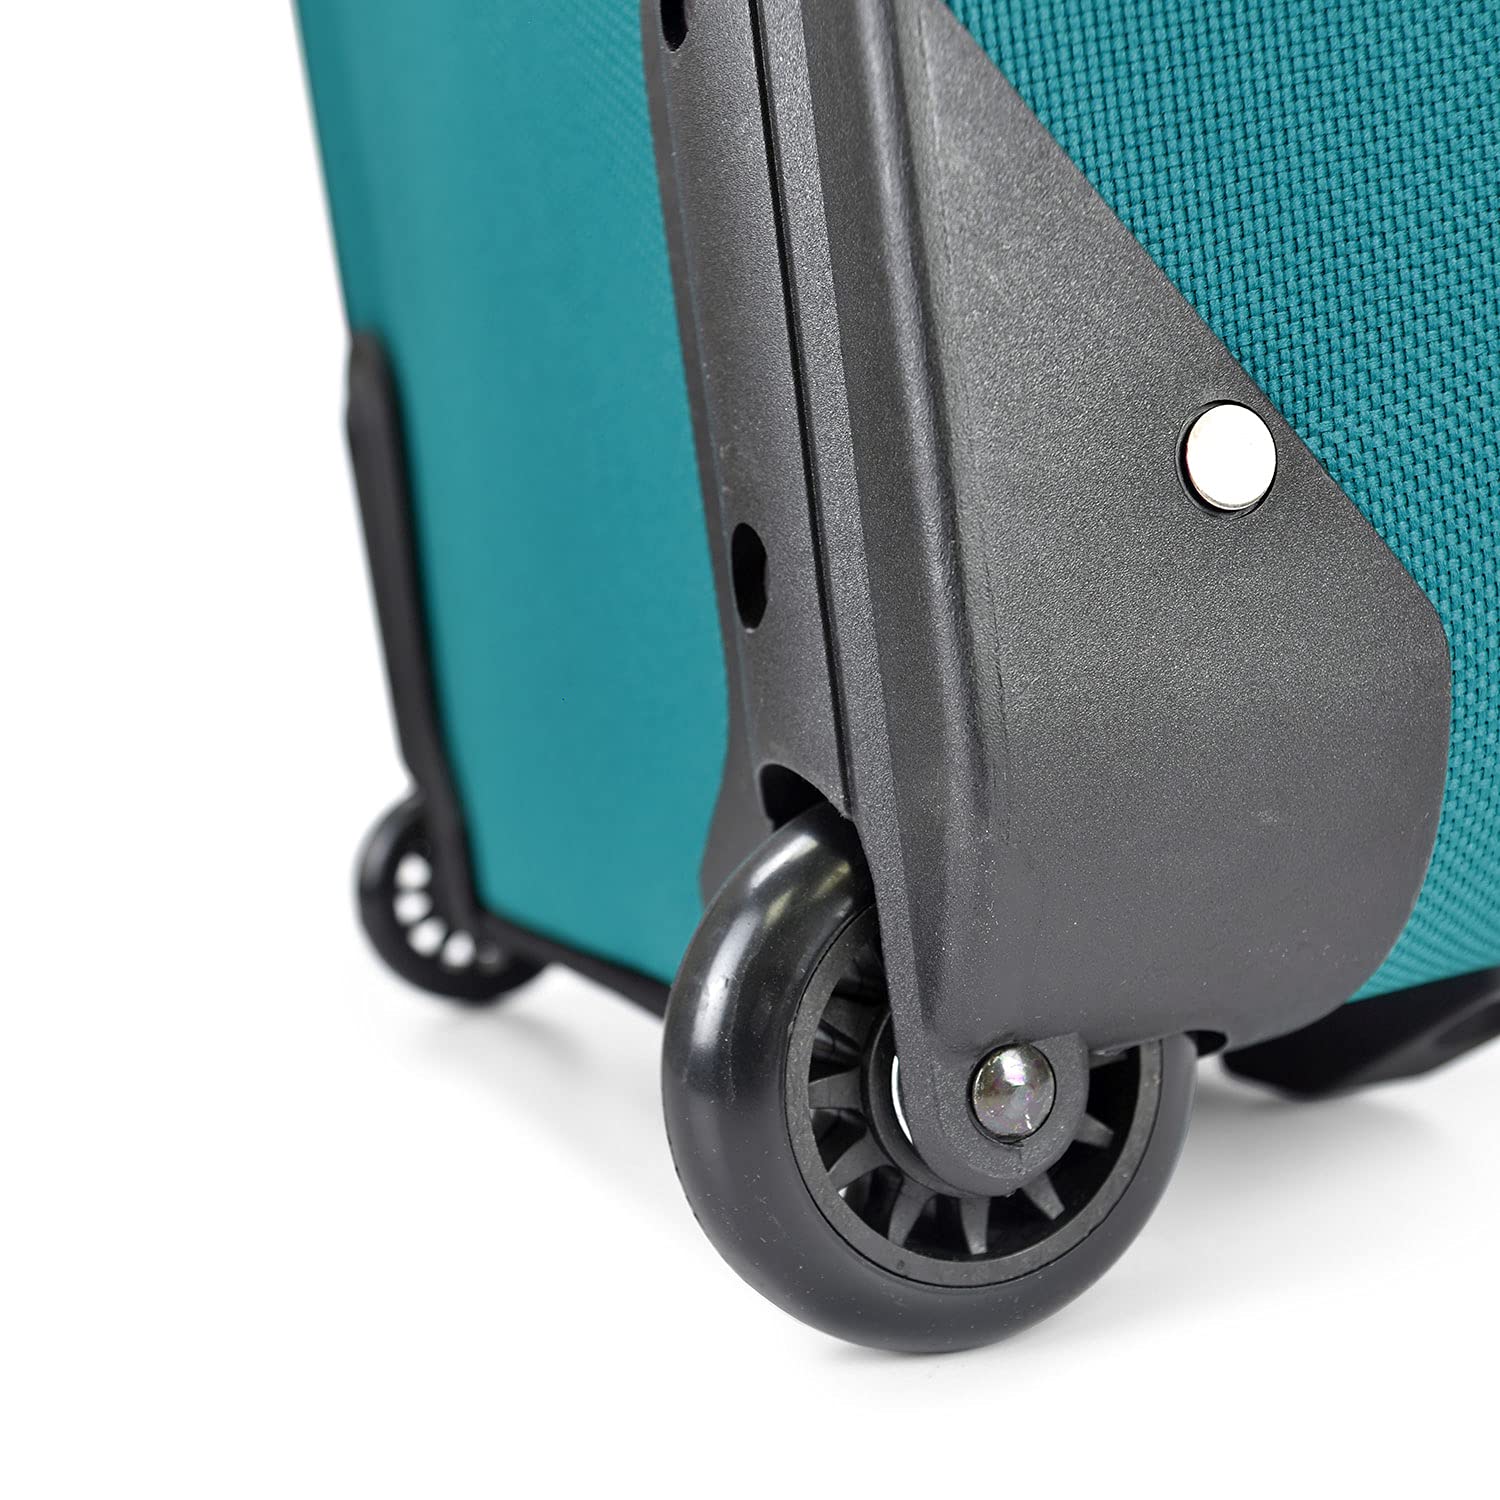 U.S. Traveler Rio Rugged Fabric Expandable Carry-on Luggage Set, Teal, 2 Wheel